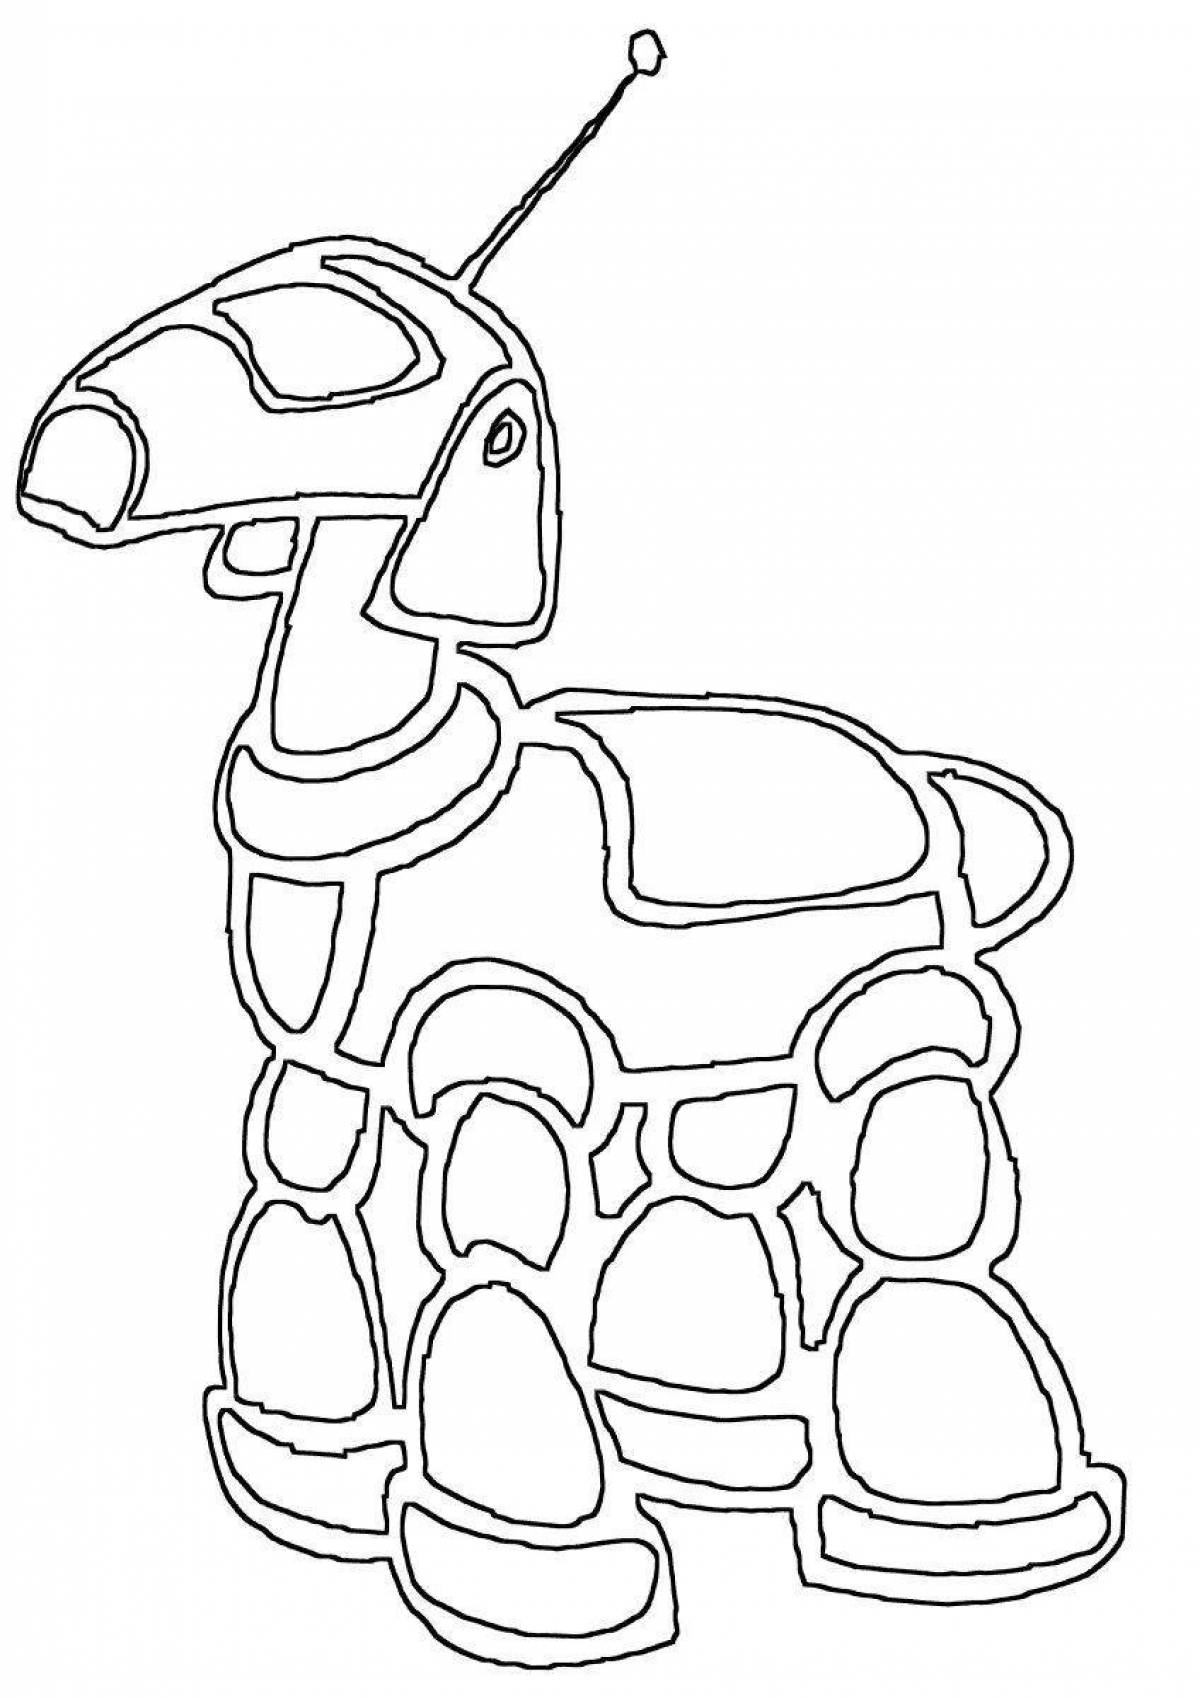 Robot dog #3